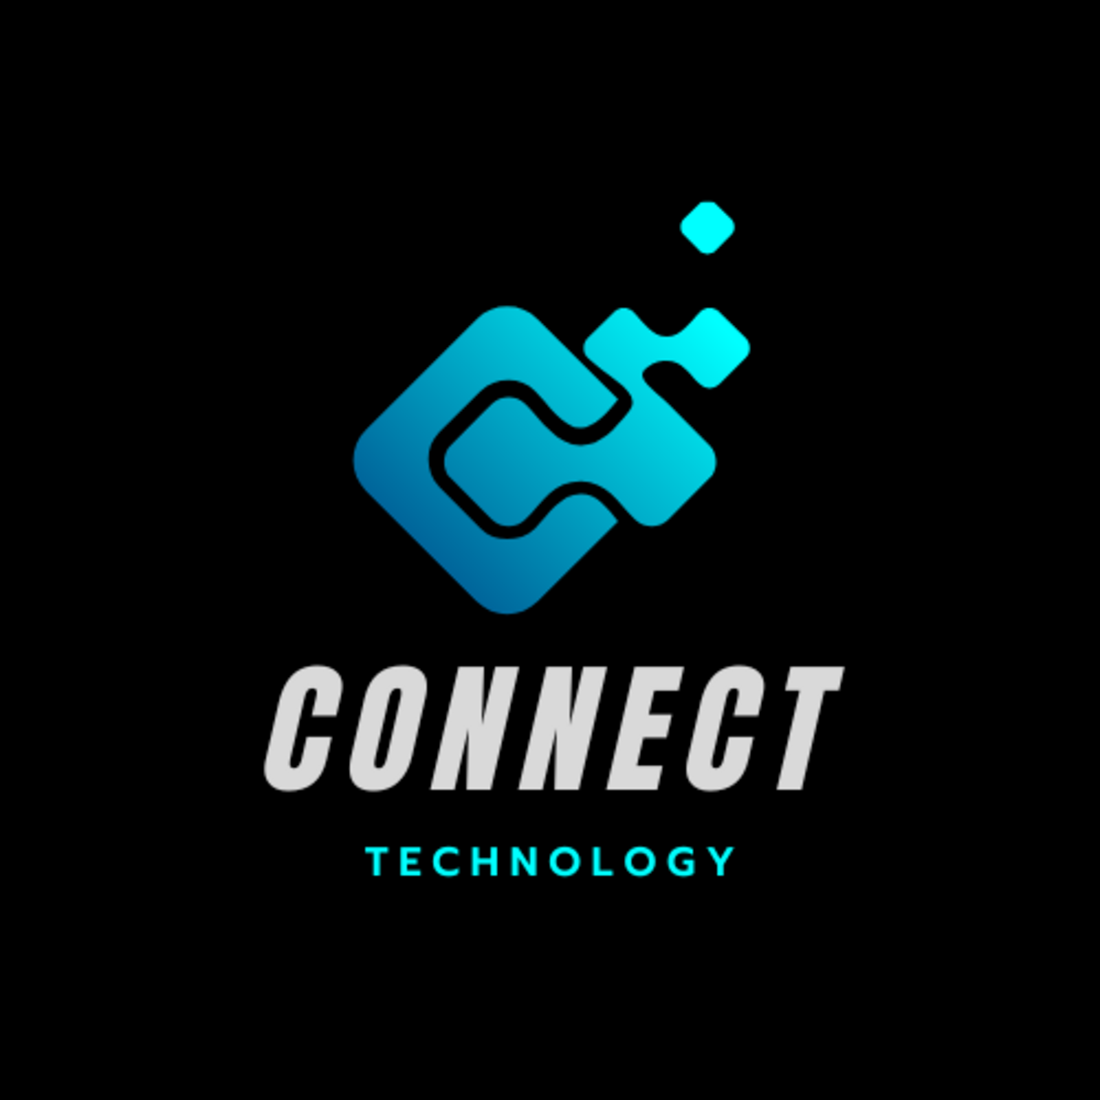 Logo for a technology company.